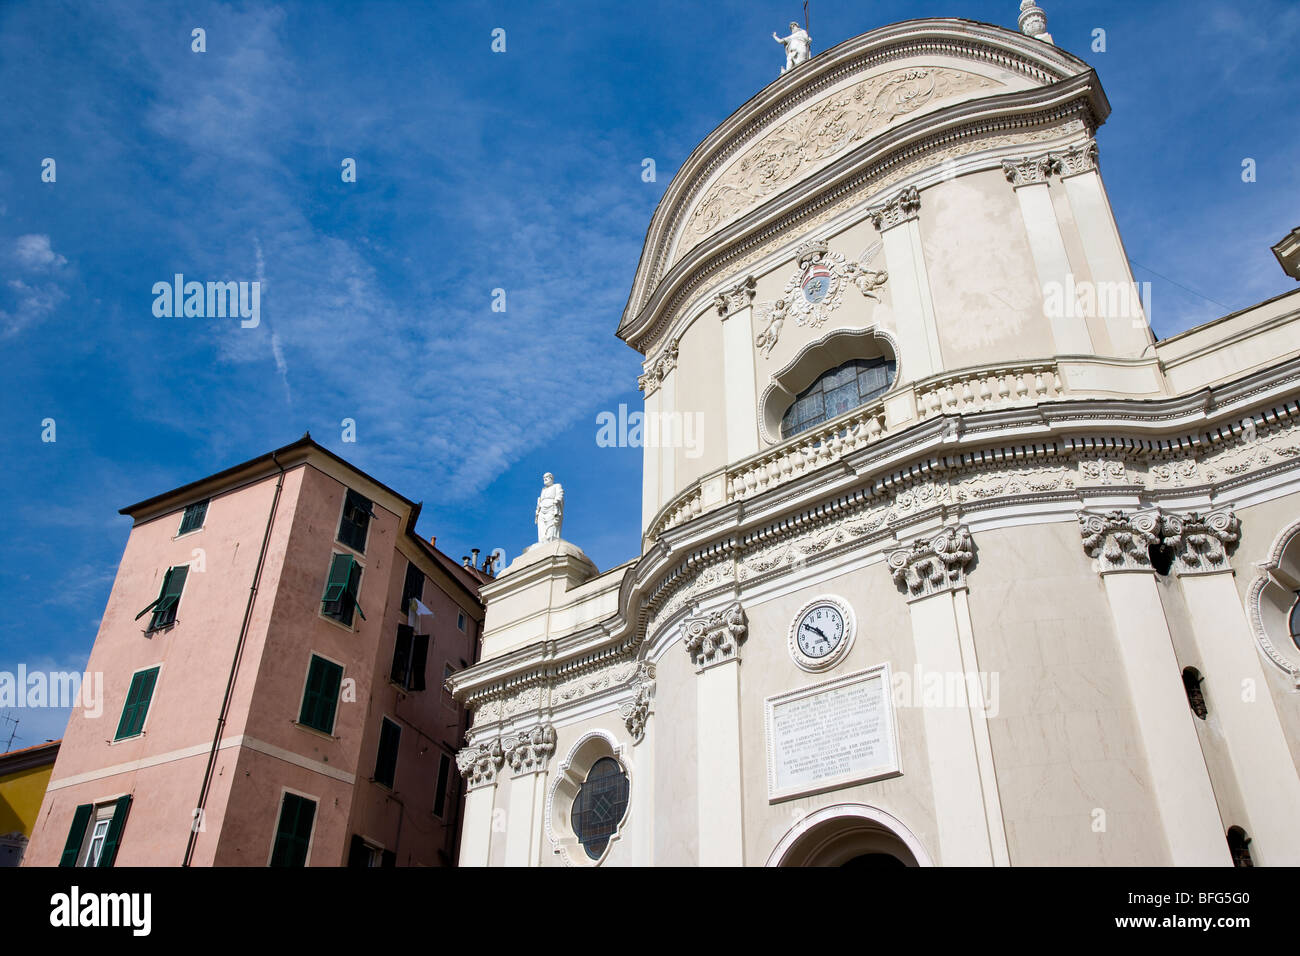 Ornate building facade, Imperia, ligurie, italie Banque D'Images